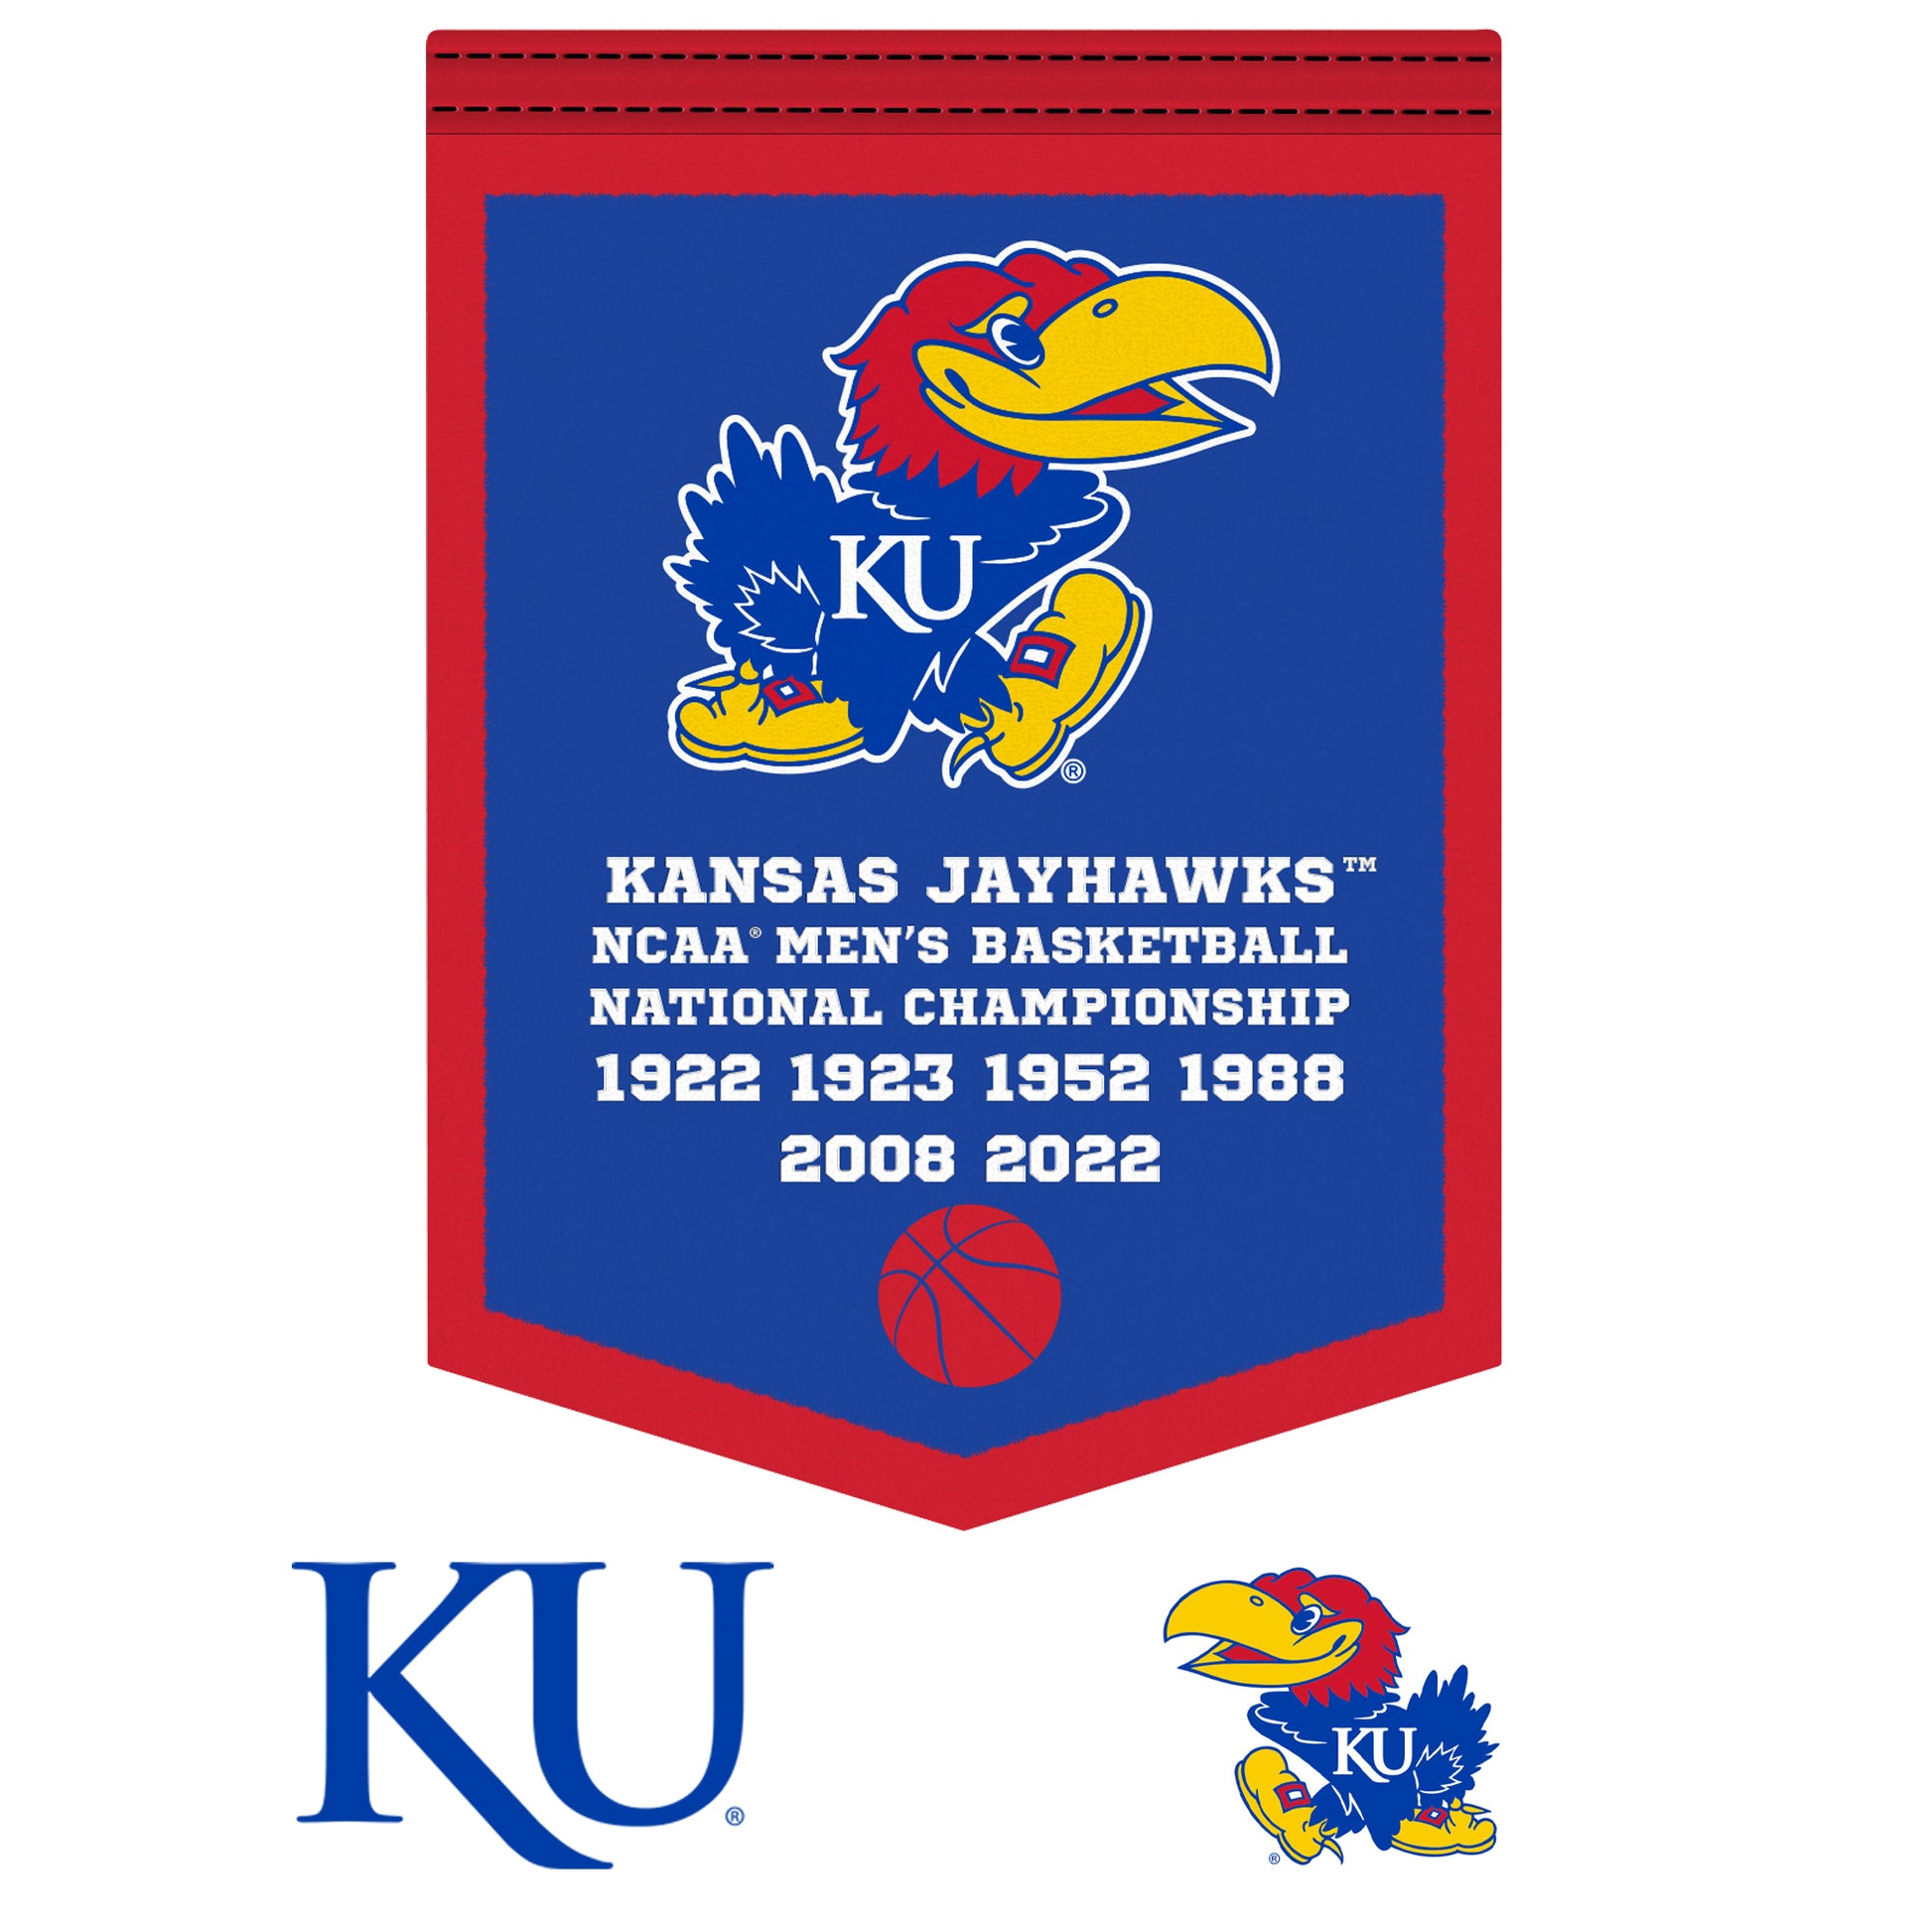 Limited Edition Kansas Jayhawks Mascot Logo Poster Art, 57% OFF